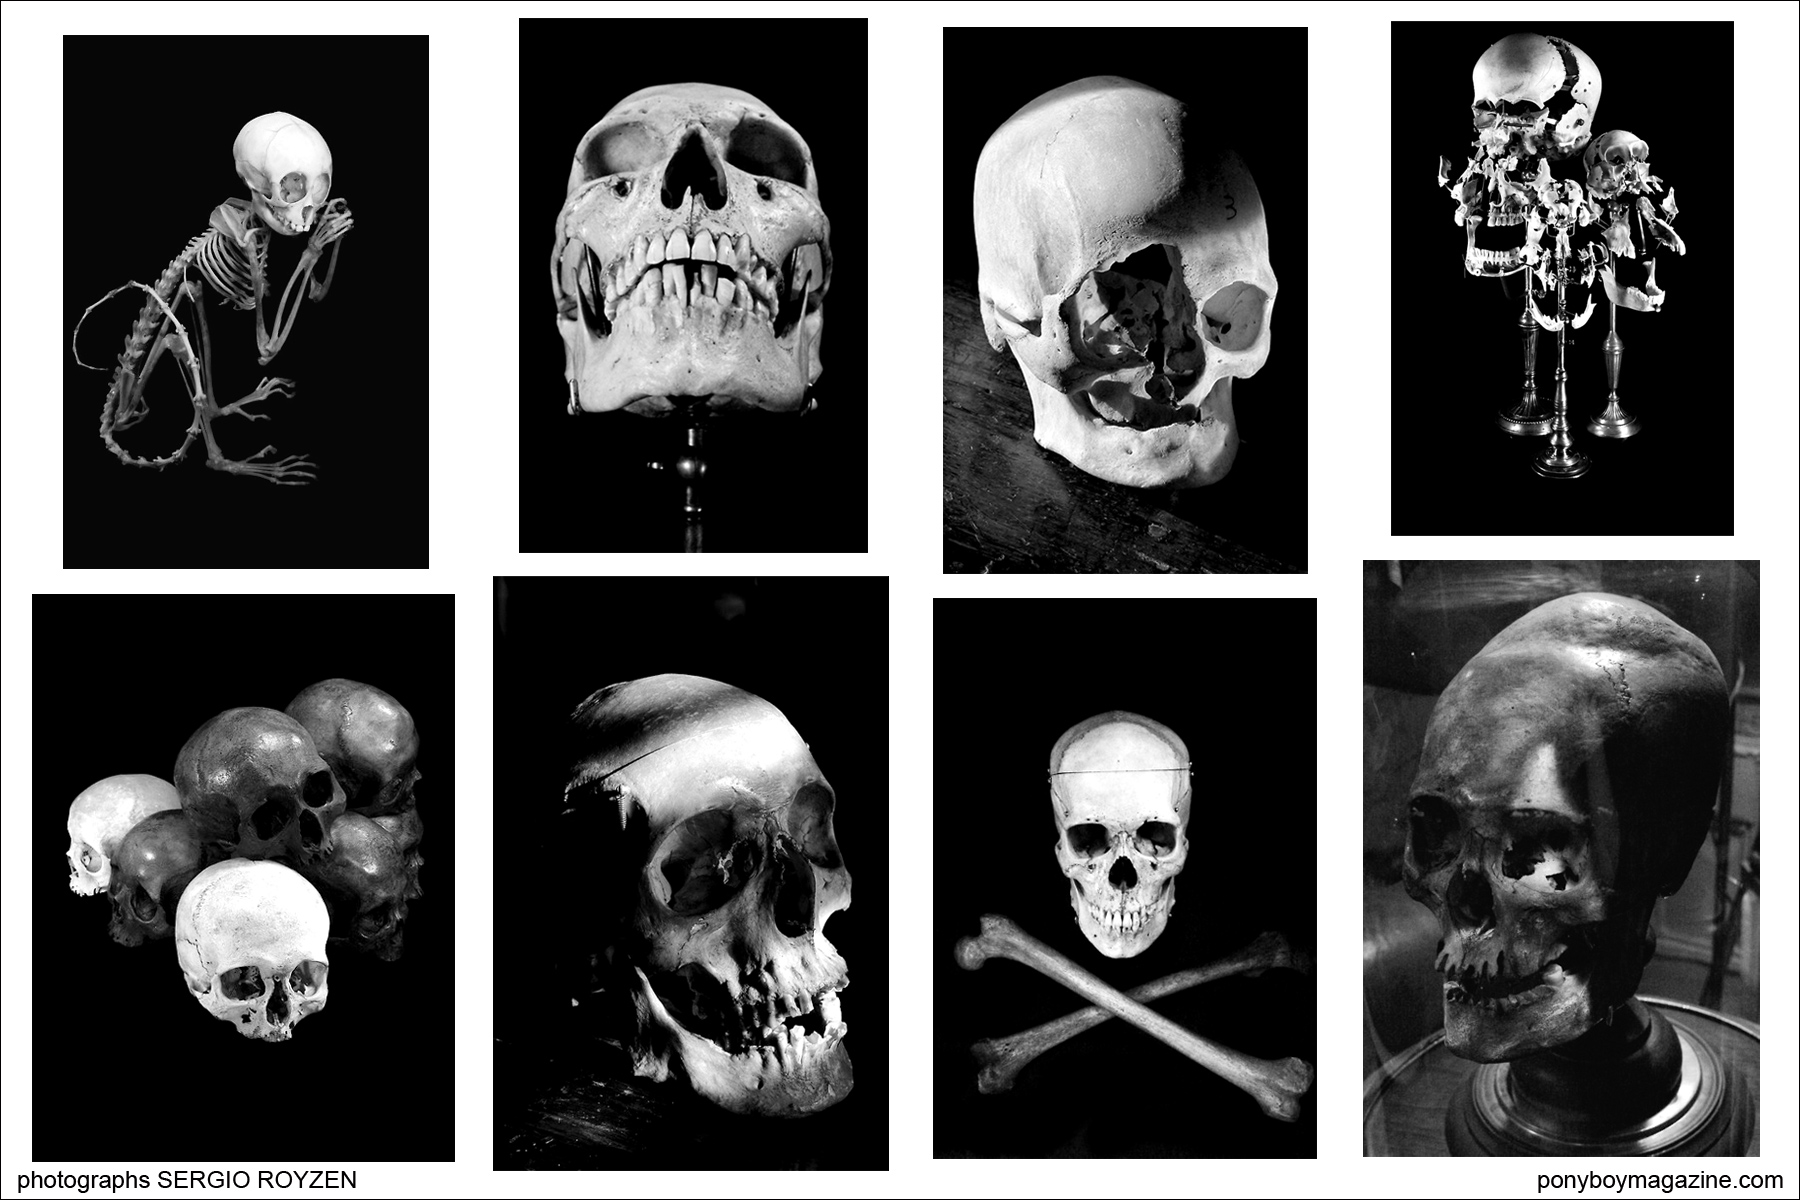 Skull collection of Ryan Matthew Cohn photographed by Sergio Royzen for Ponyboy Magazine.